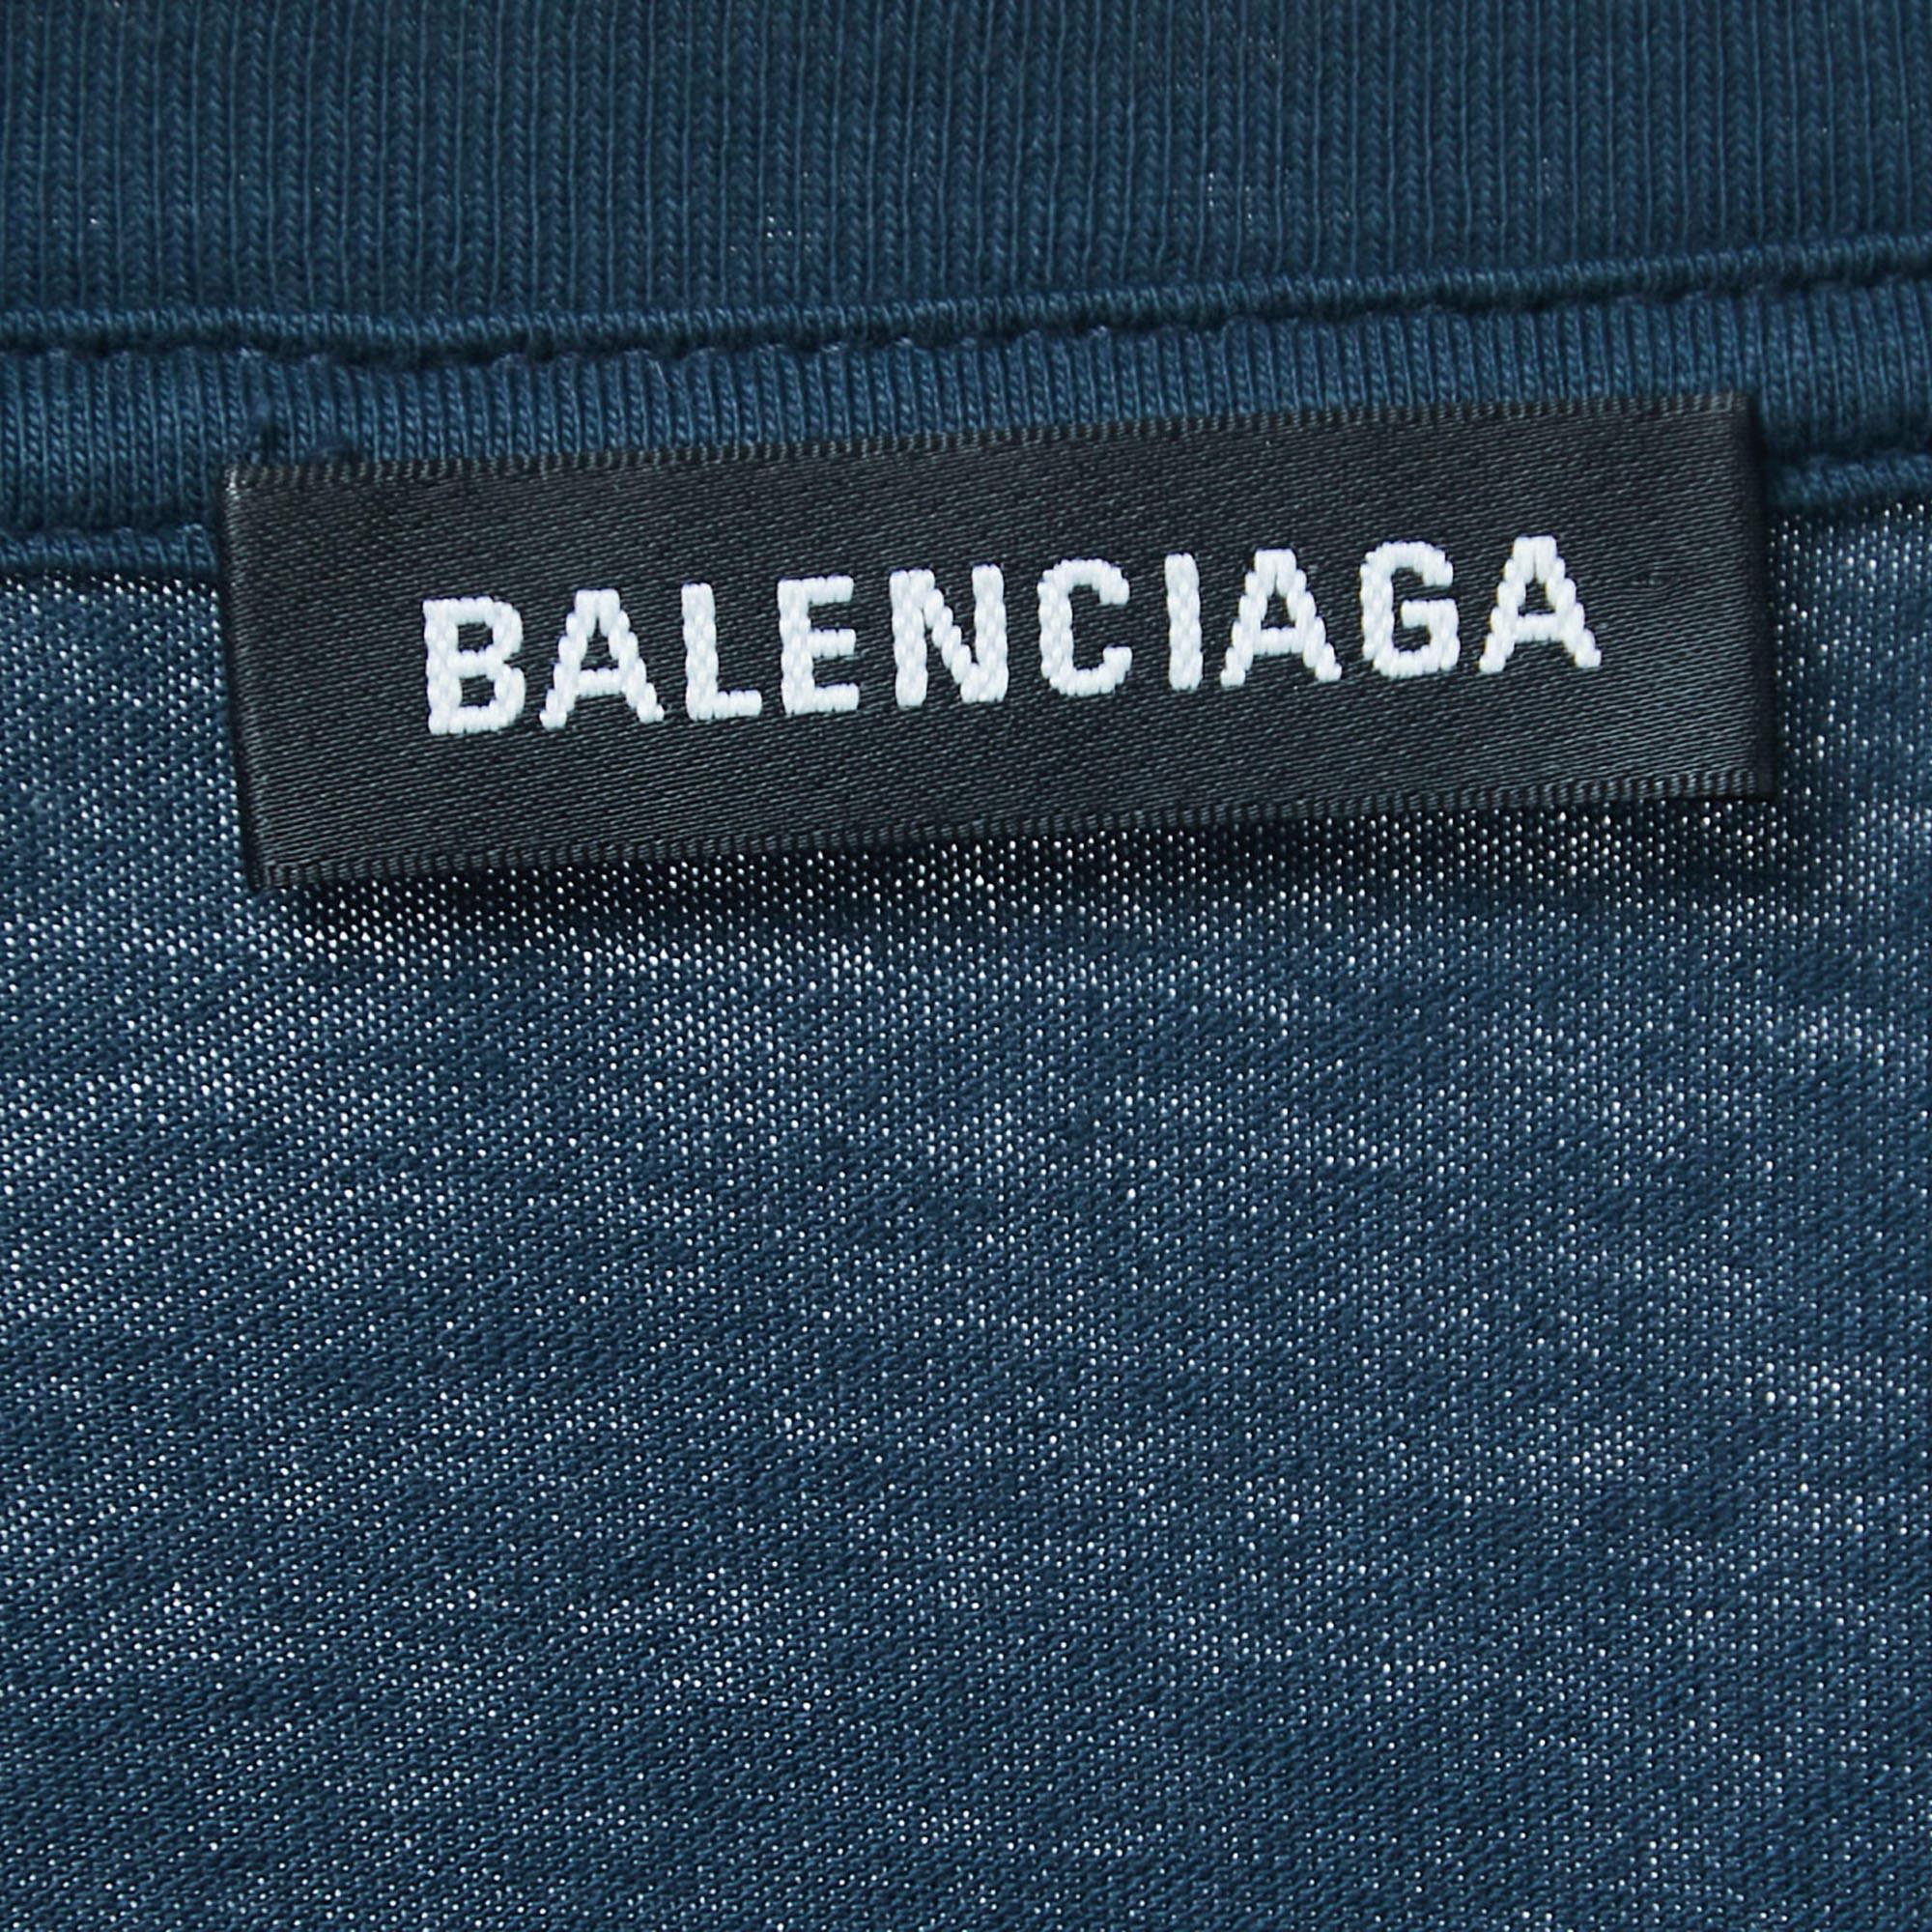 Balenciaga Navy Blue Printed Cotton T-Shirt S For Sale 1